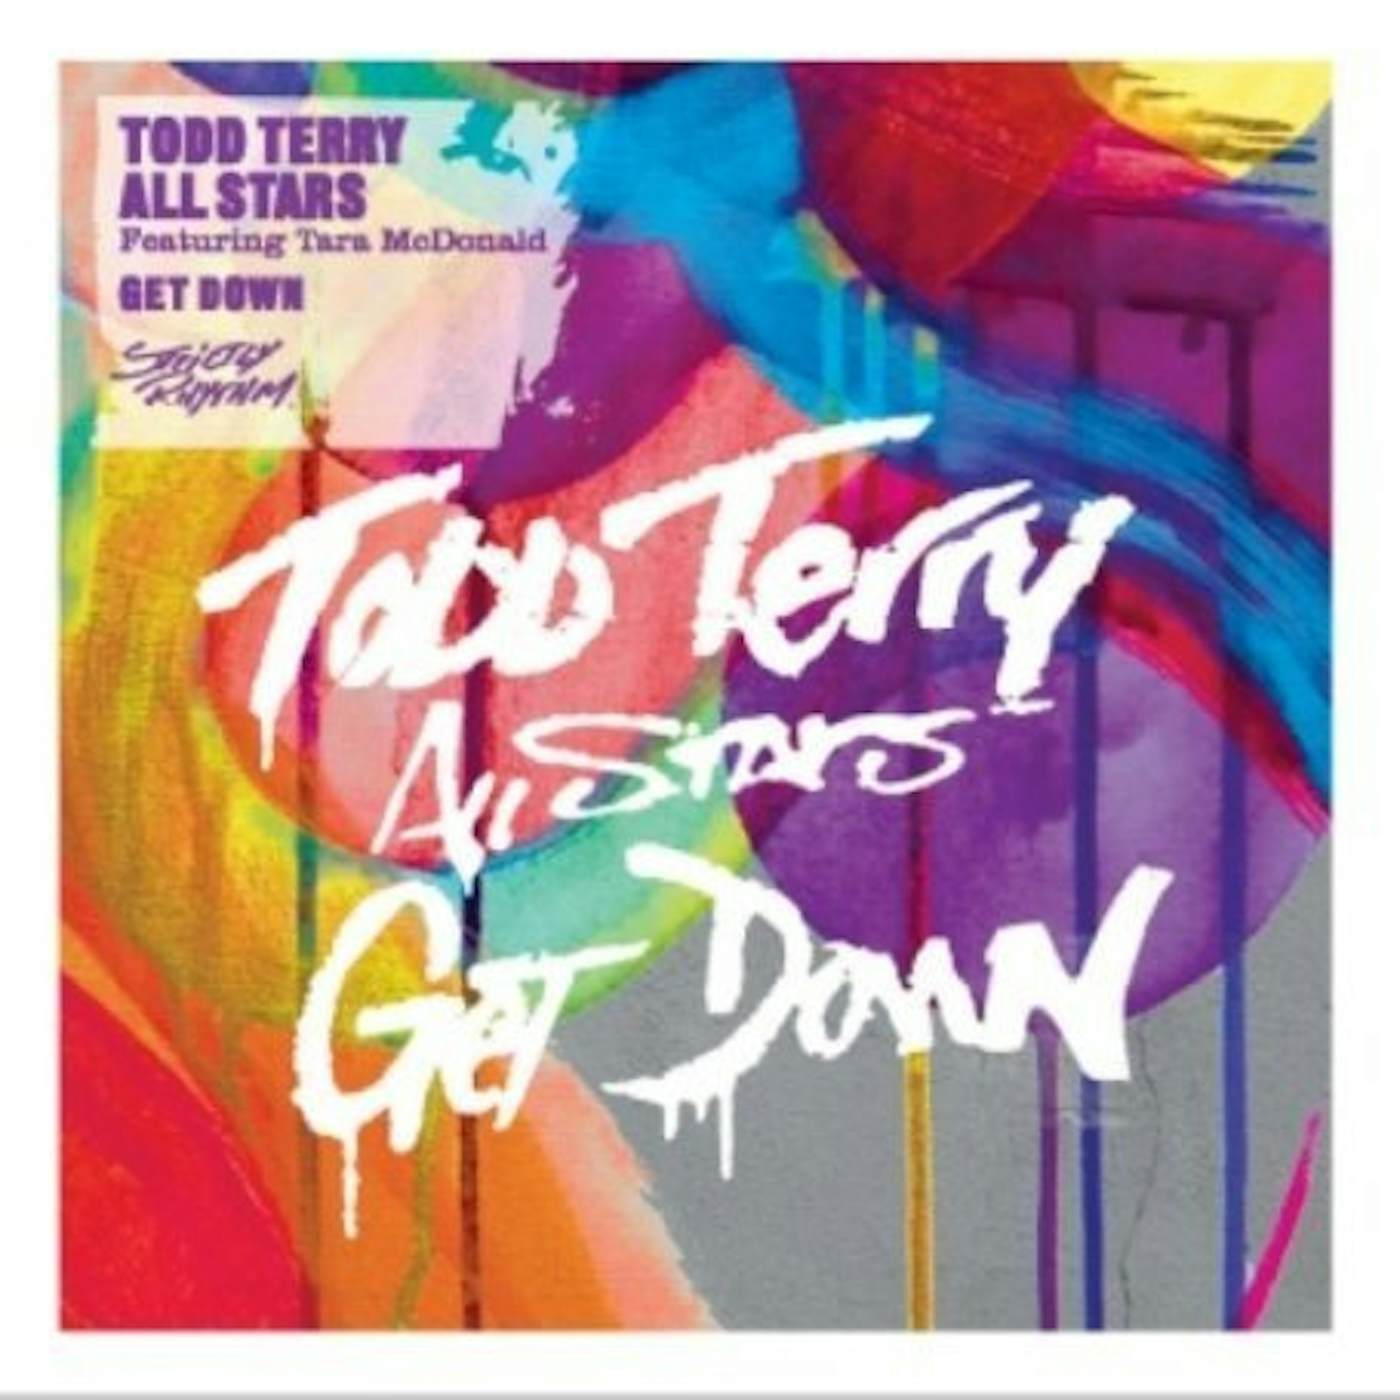 Todd Allstars Terry GET DOWN Vinyl Record